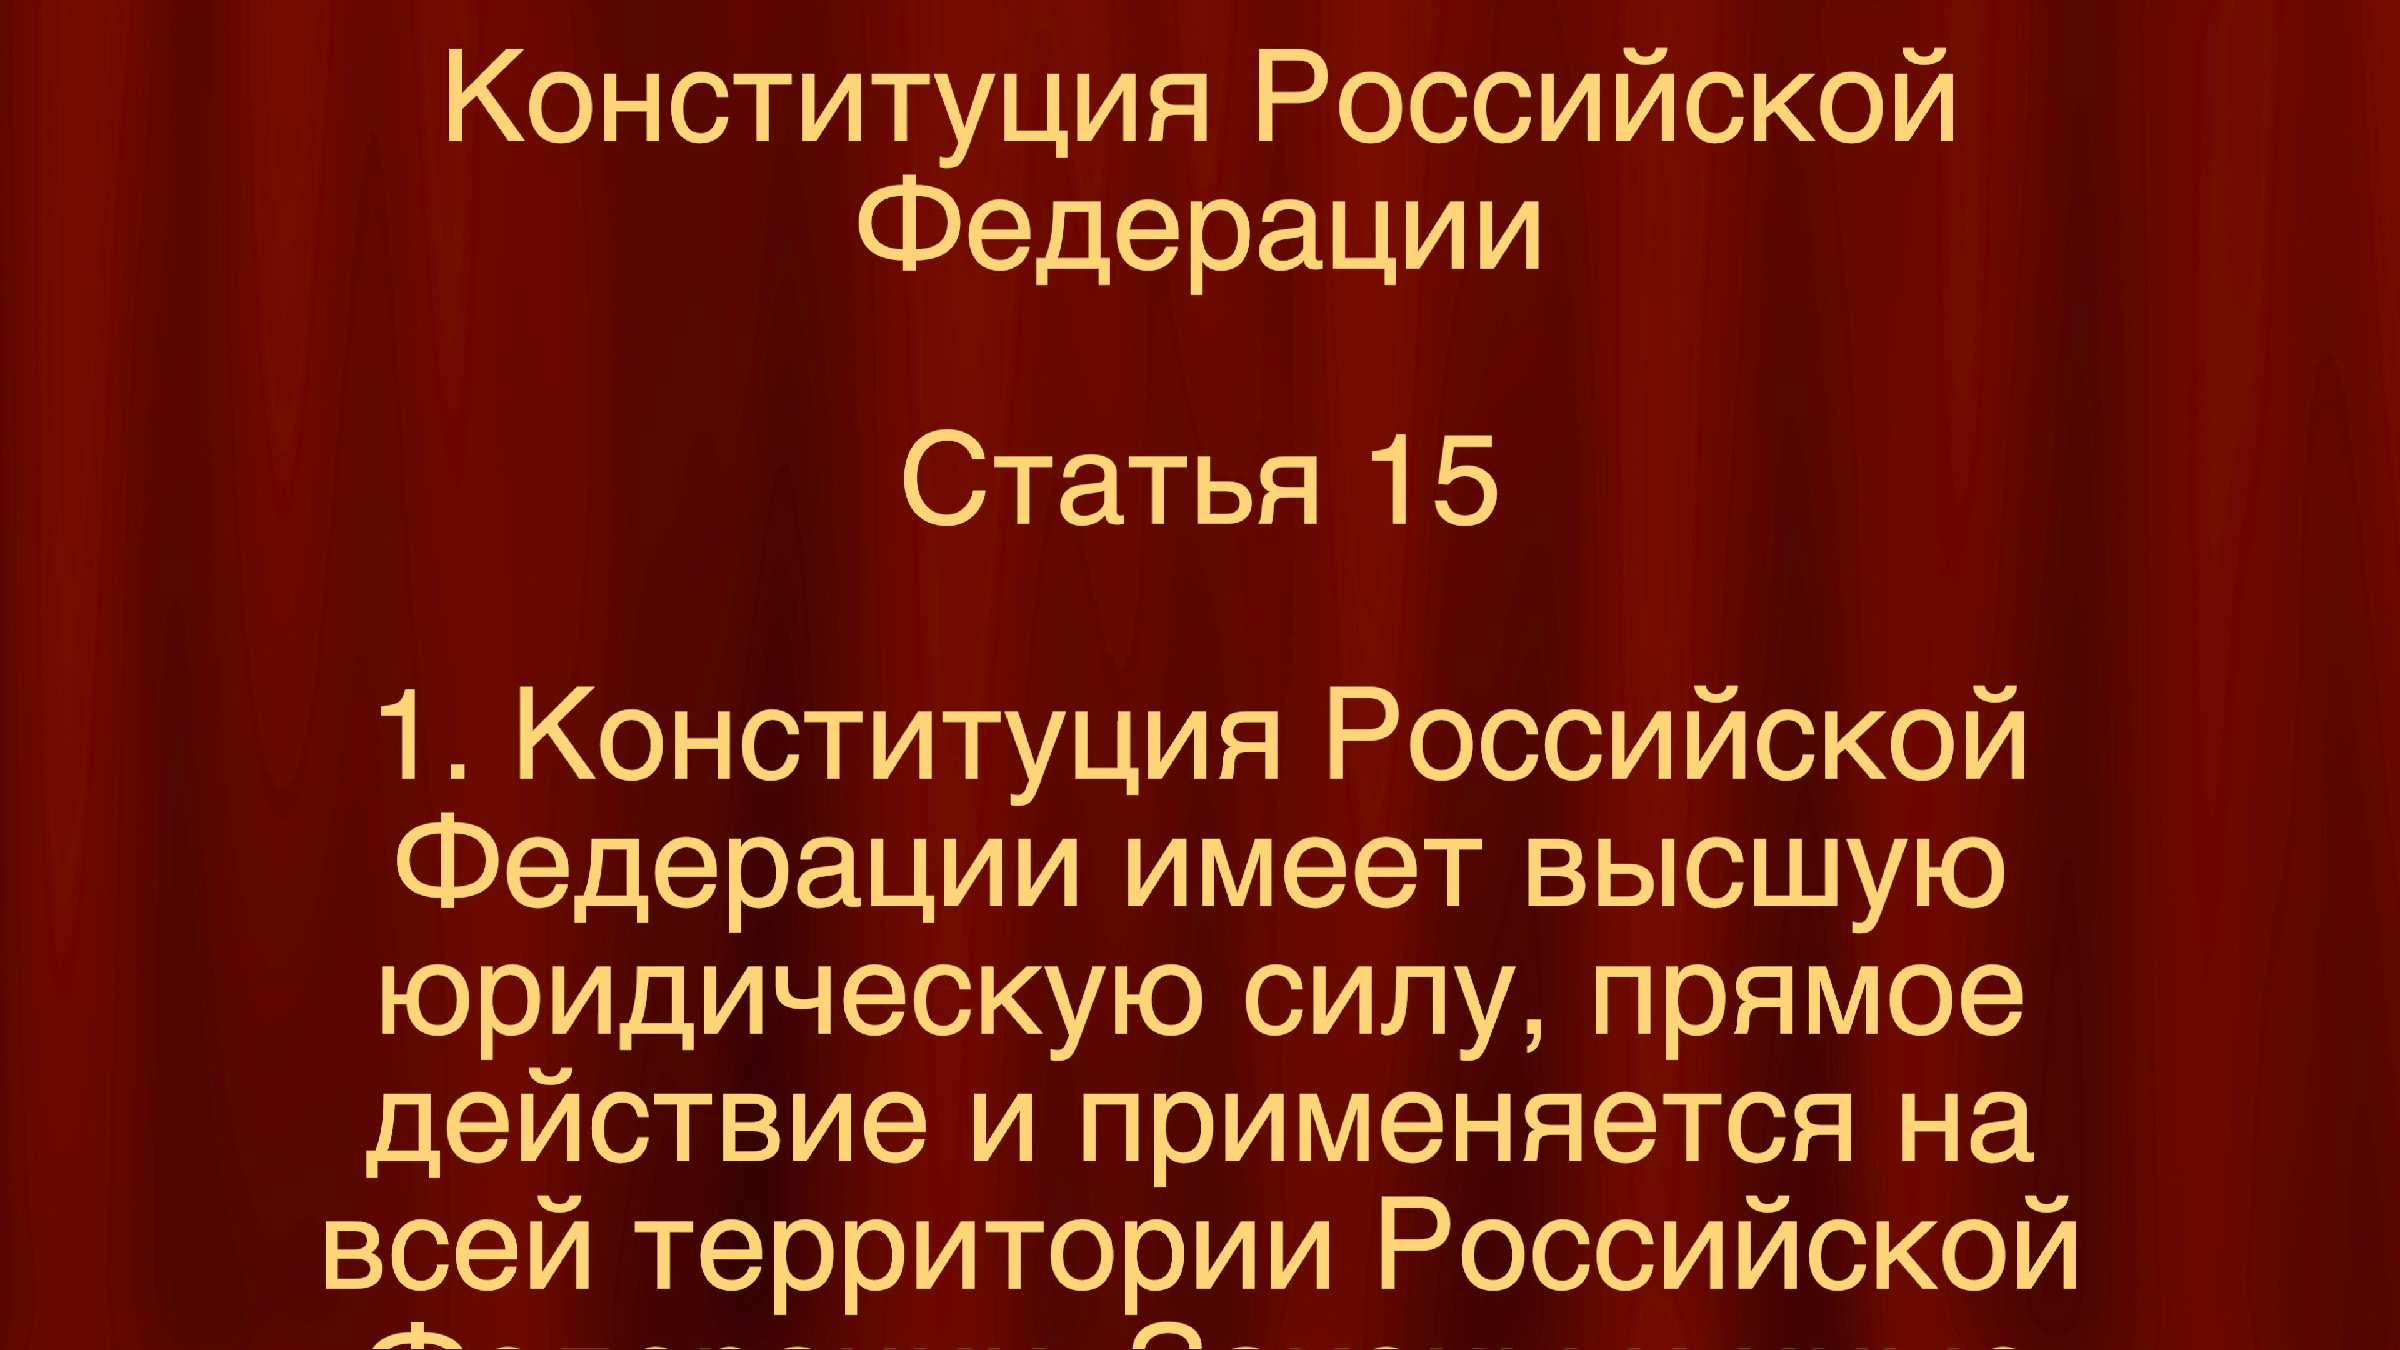 Конституции 15 Красноярск. П 4 ст 15 конституции